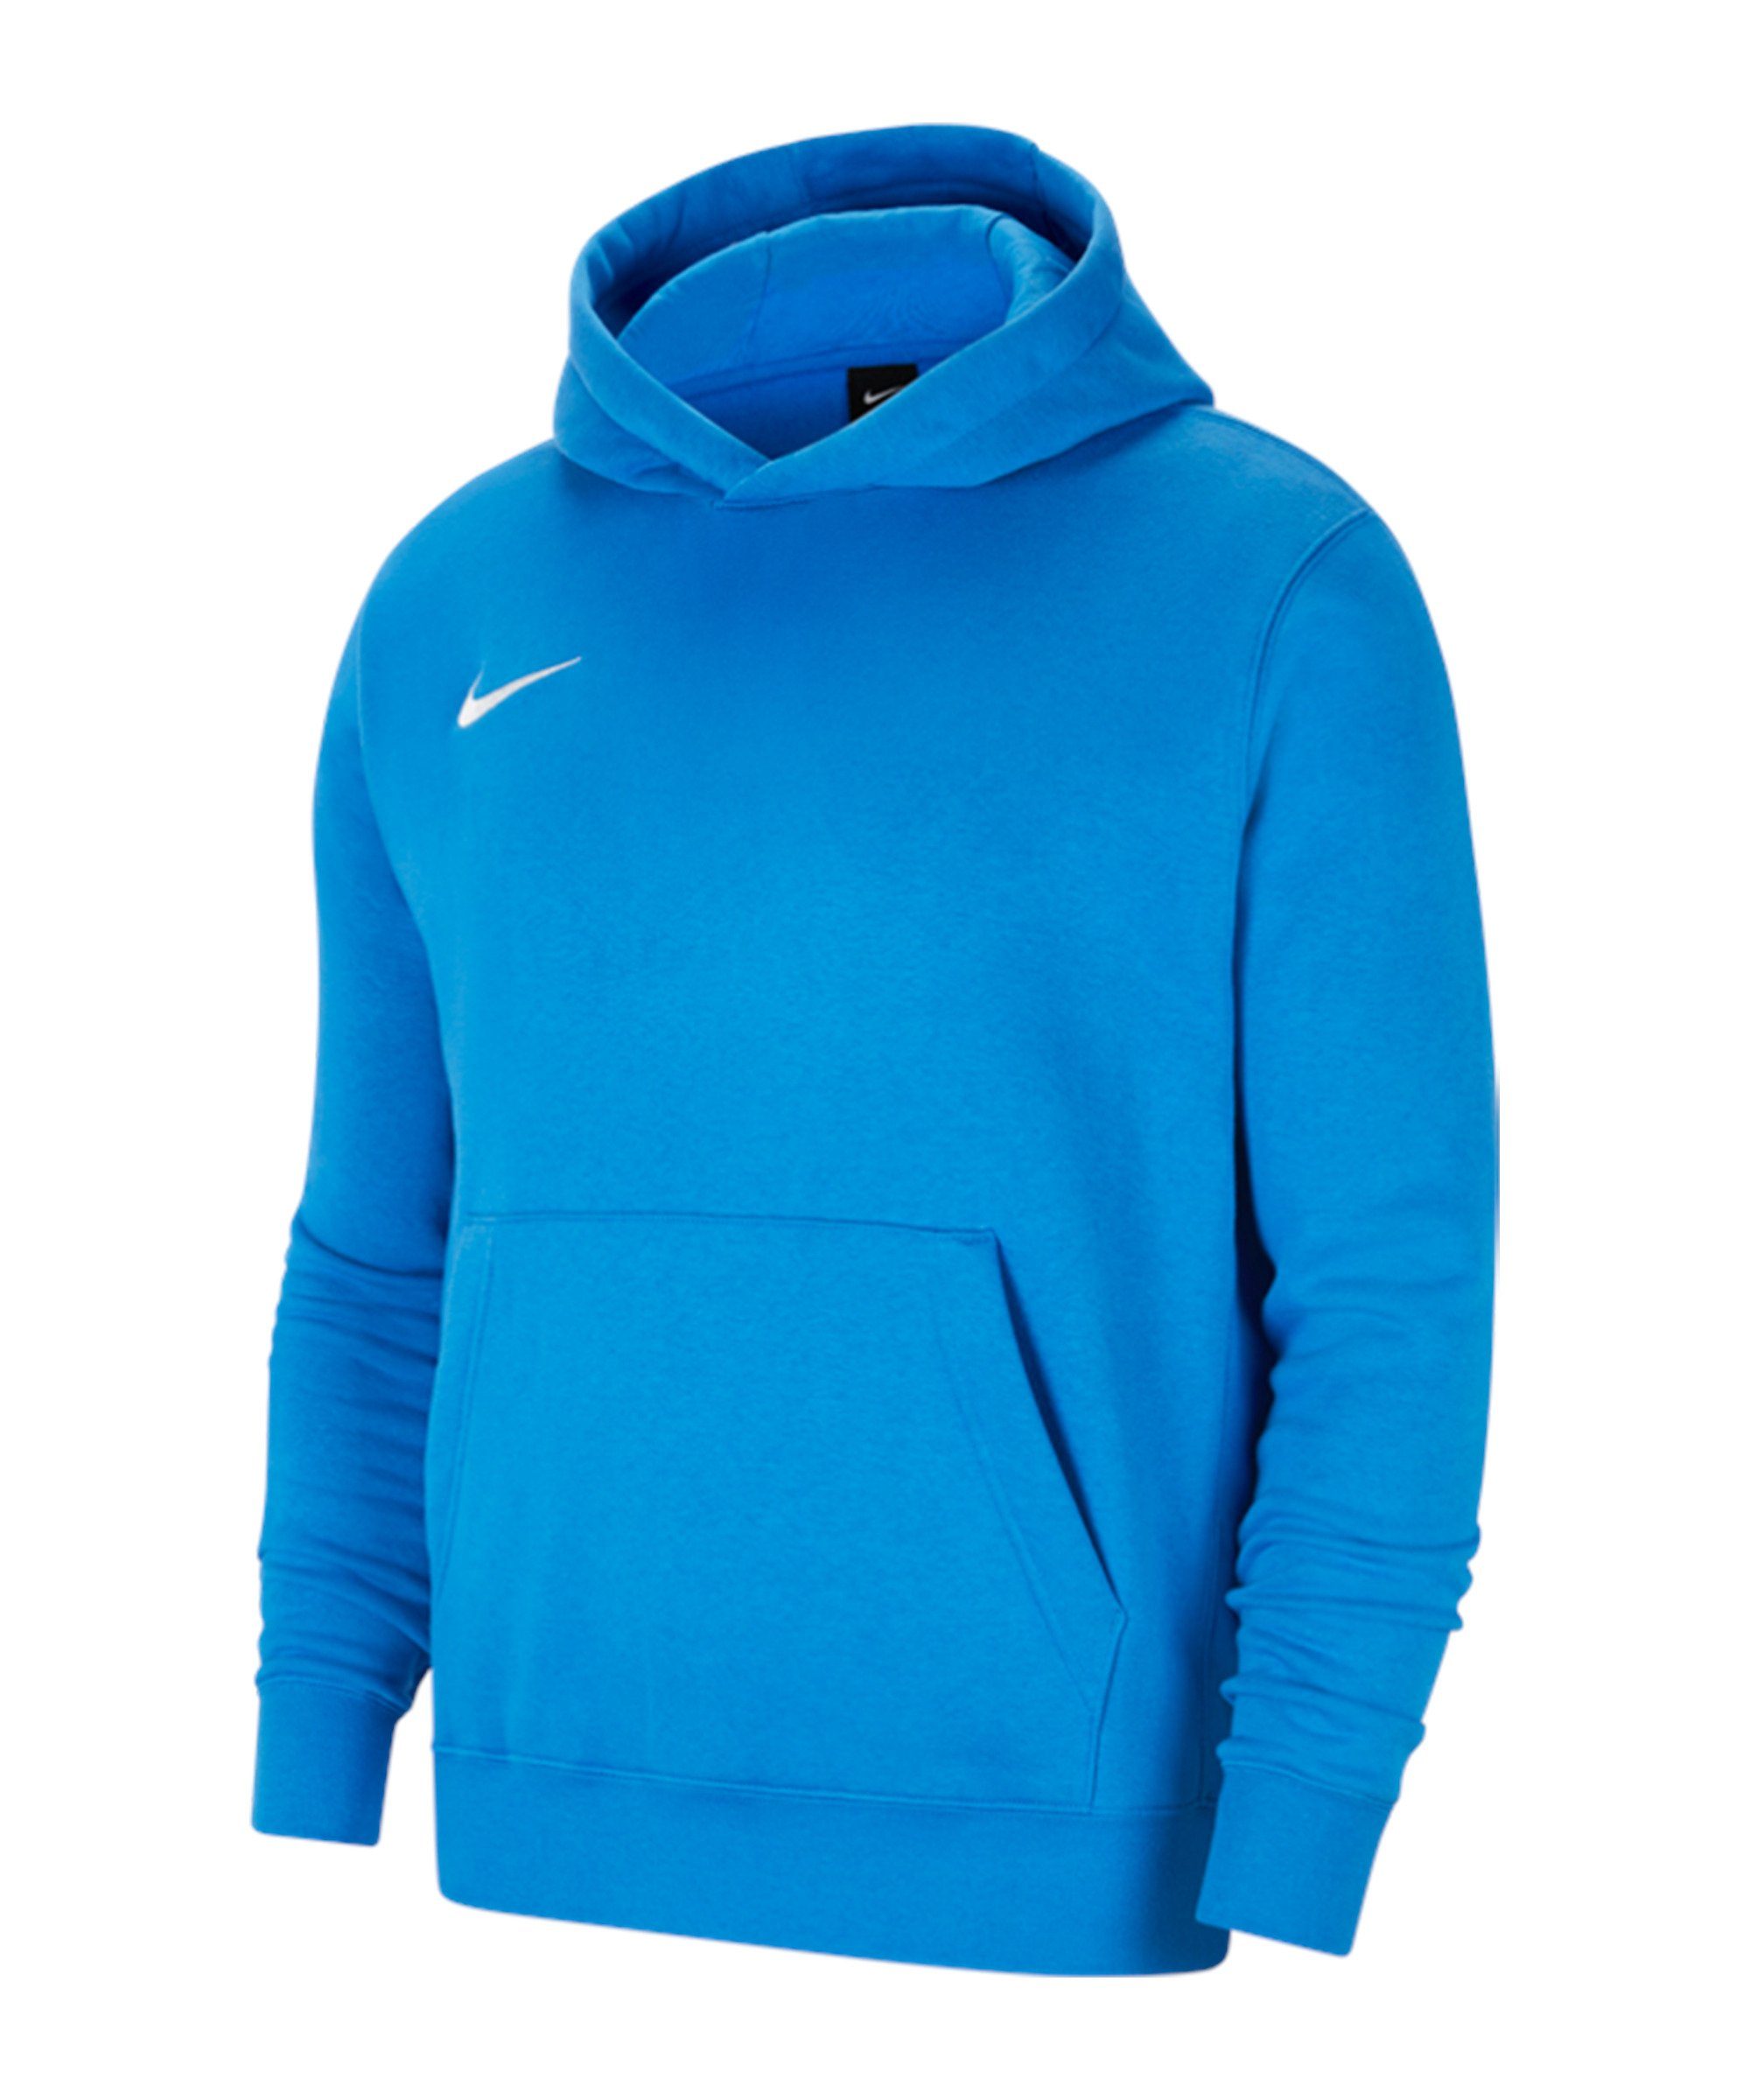 blauweiss Kids 20 Nike Fleece Park Sweatshirt Hoody